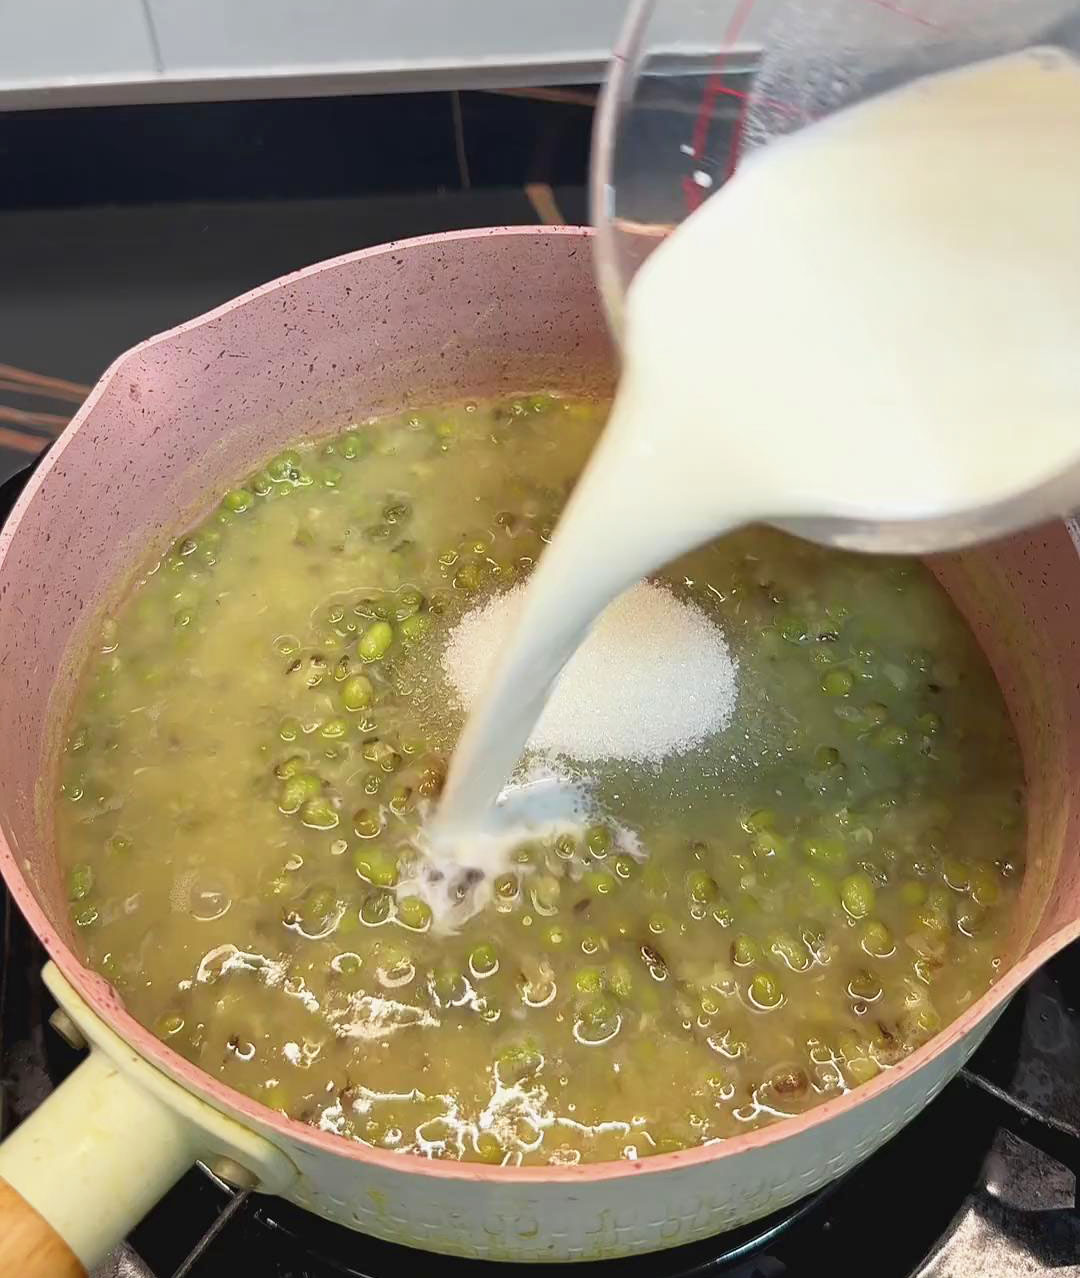 Pour the milk and glutinous rice flour mixture into the pot